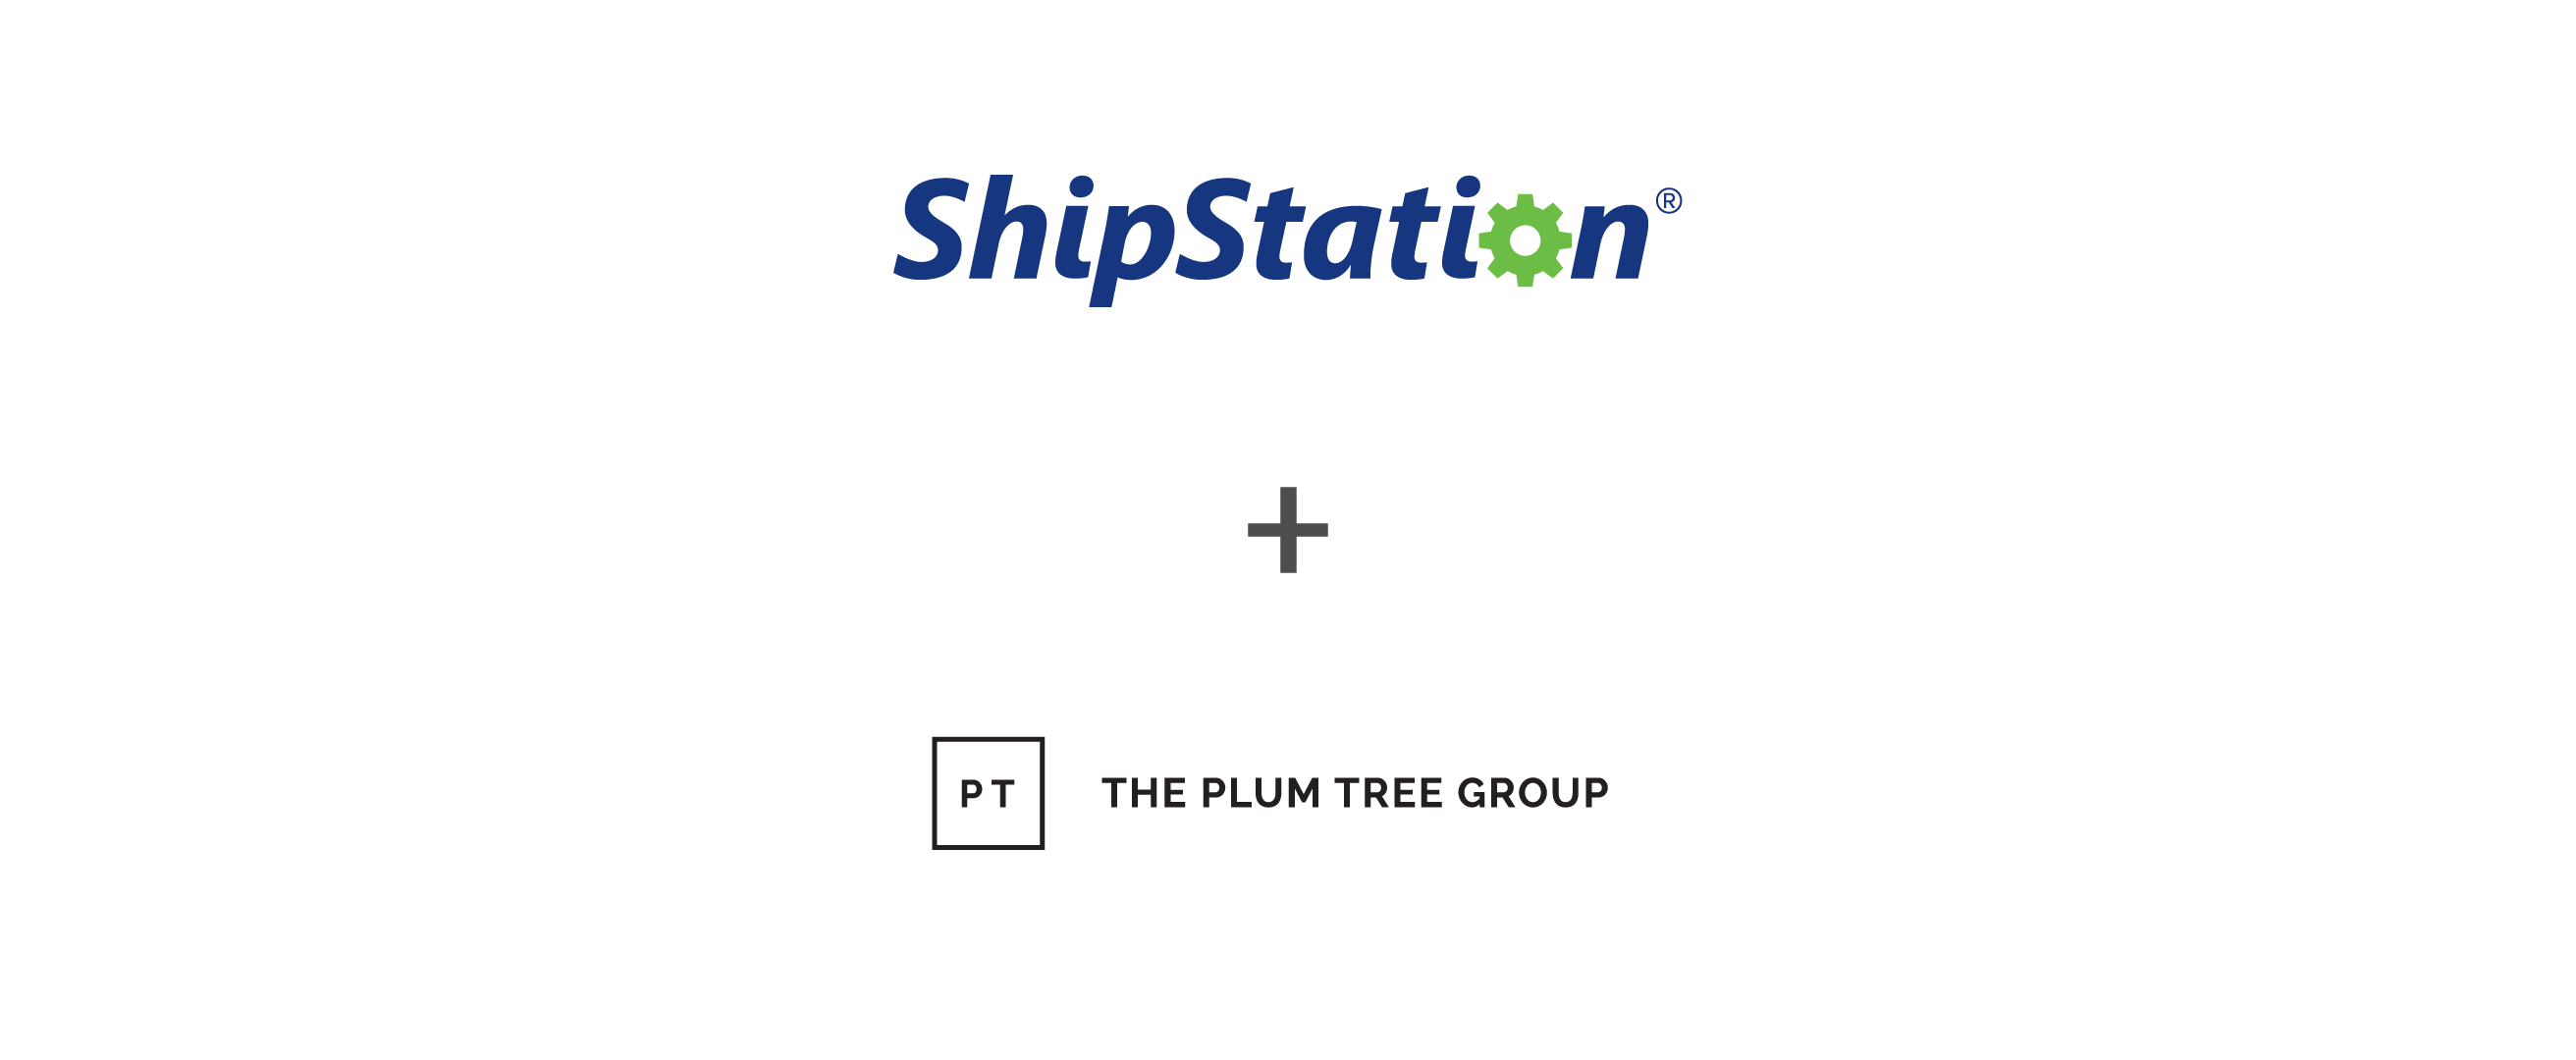 eCommerce solution provider plum tree group